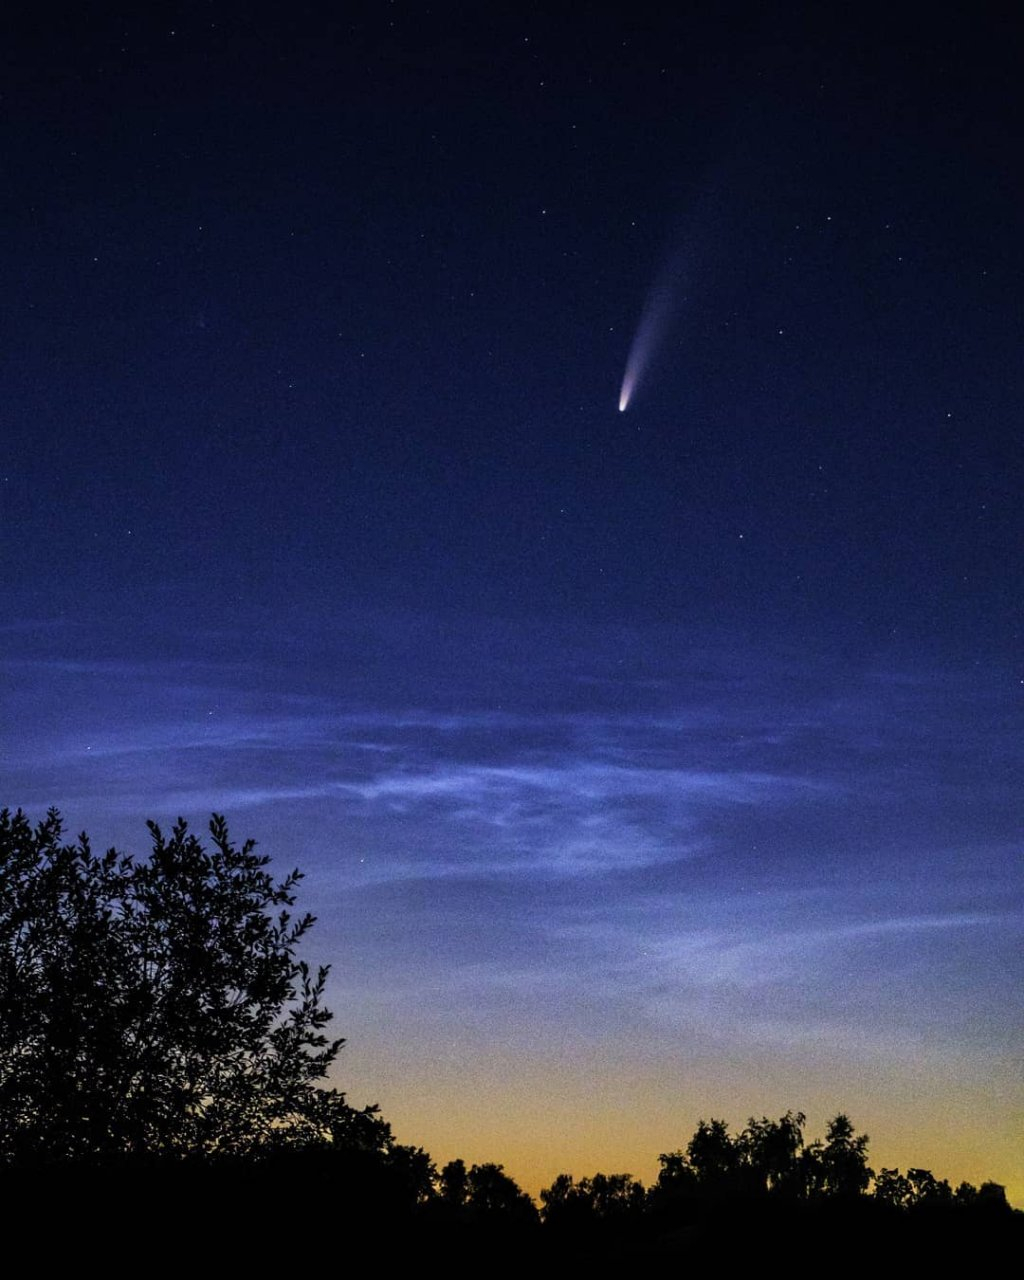 Над Рязанью пролетает комета NEOWISE: фотоподборка